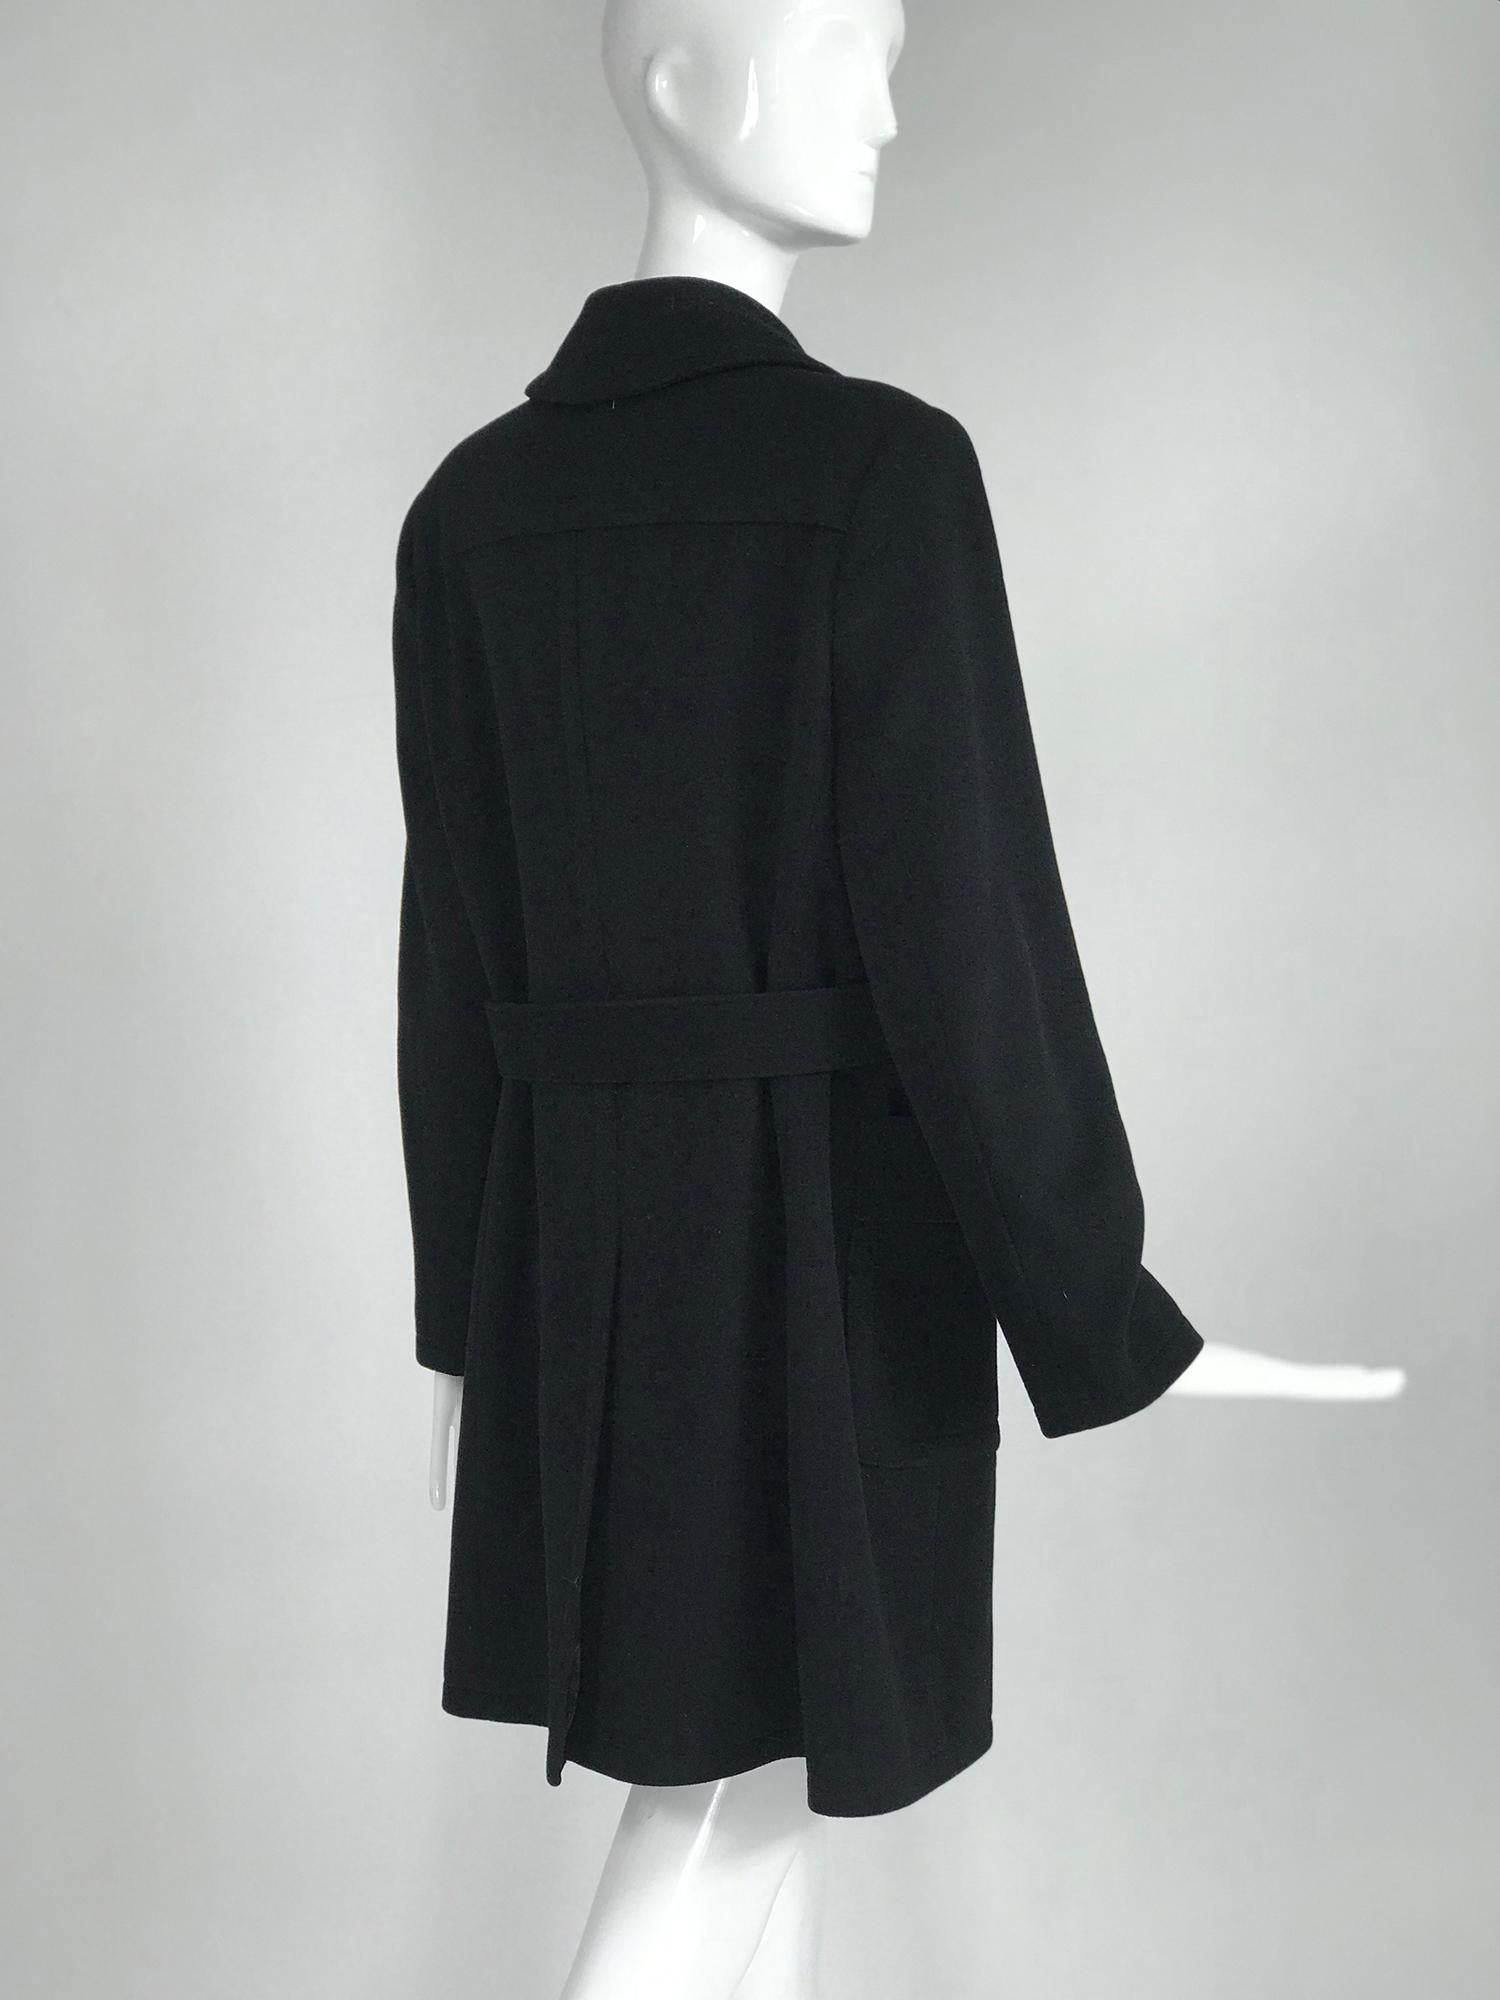 Giorgio Armani Black Wool Coat In Good Condition For Sale In West Palm Beach, FL